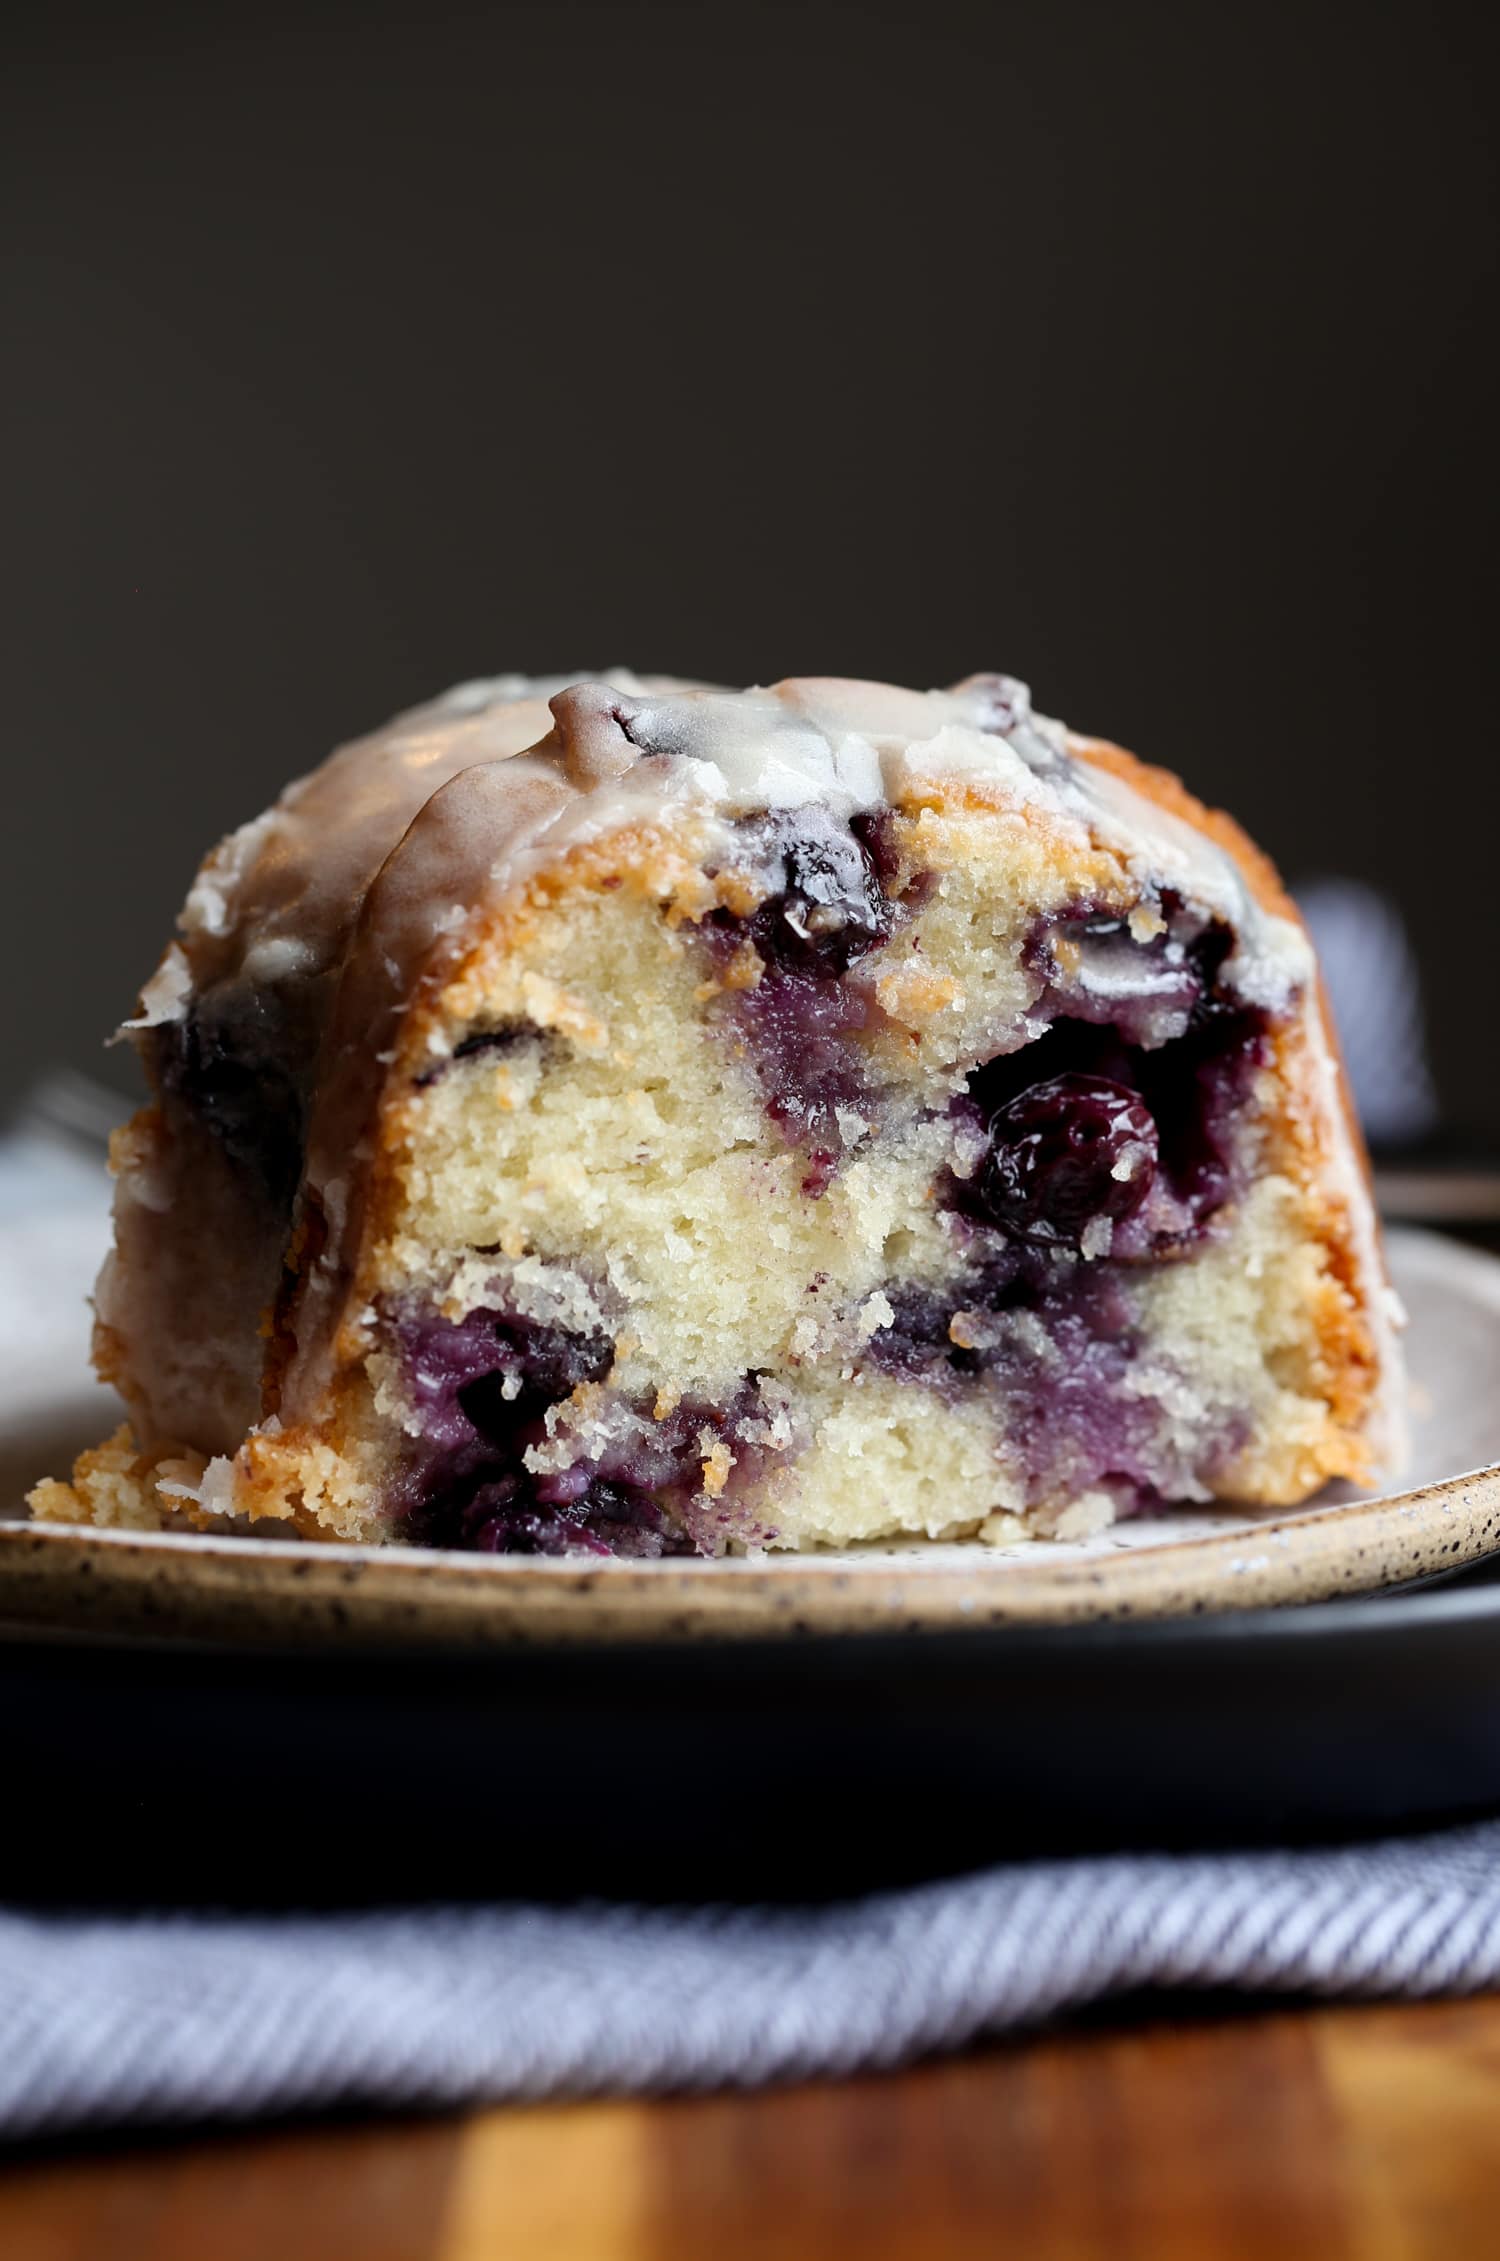 Share 136+ blueberry cream cake - in.eteachers